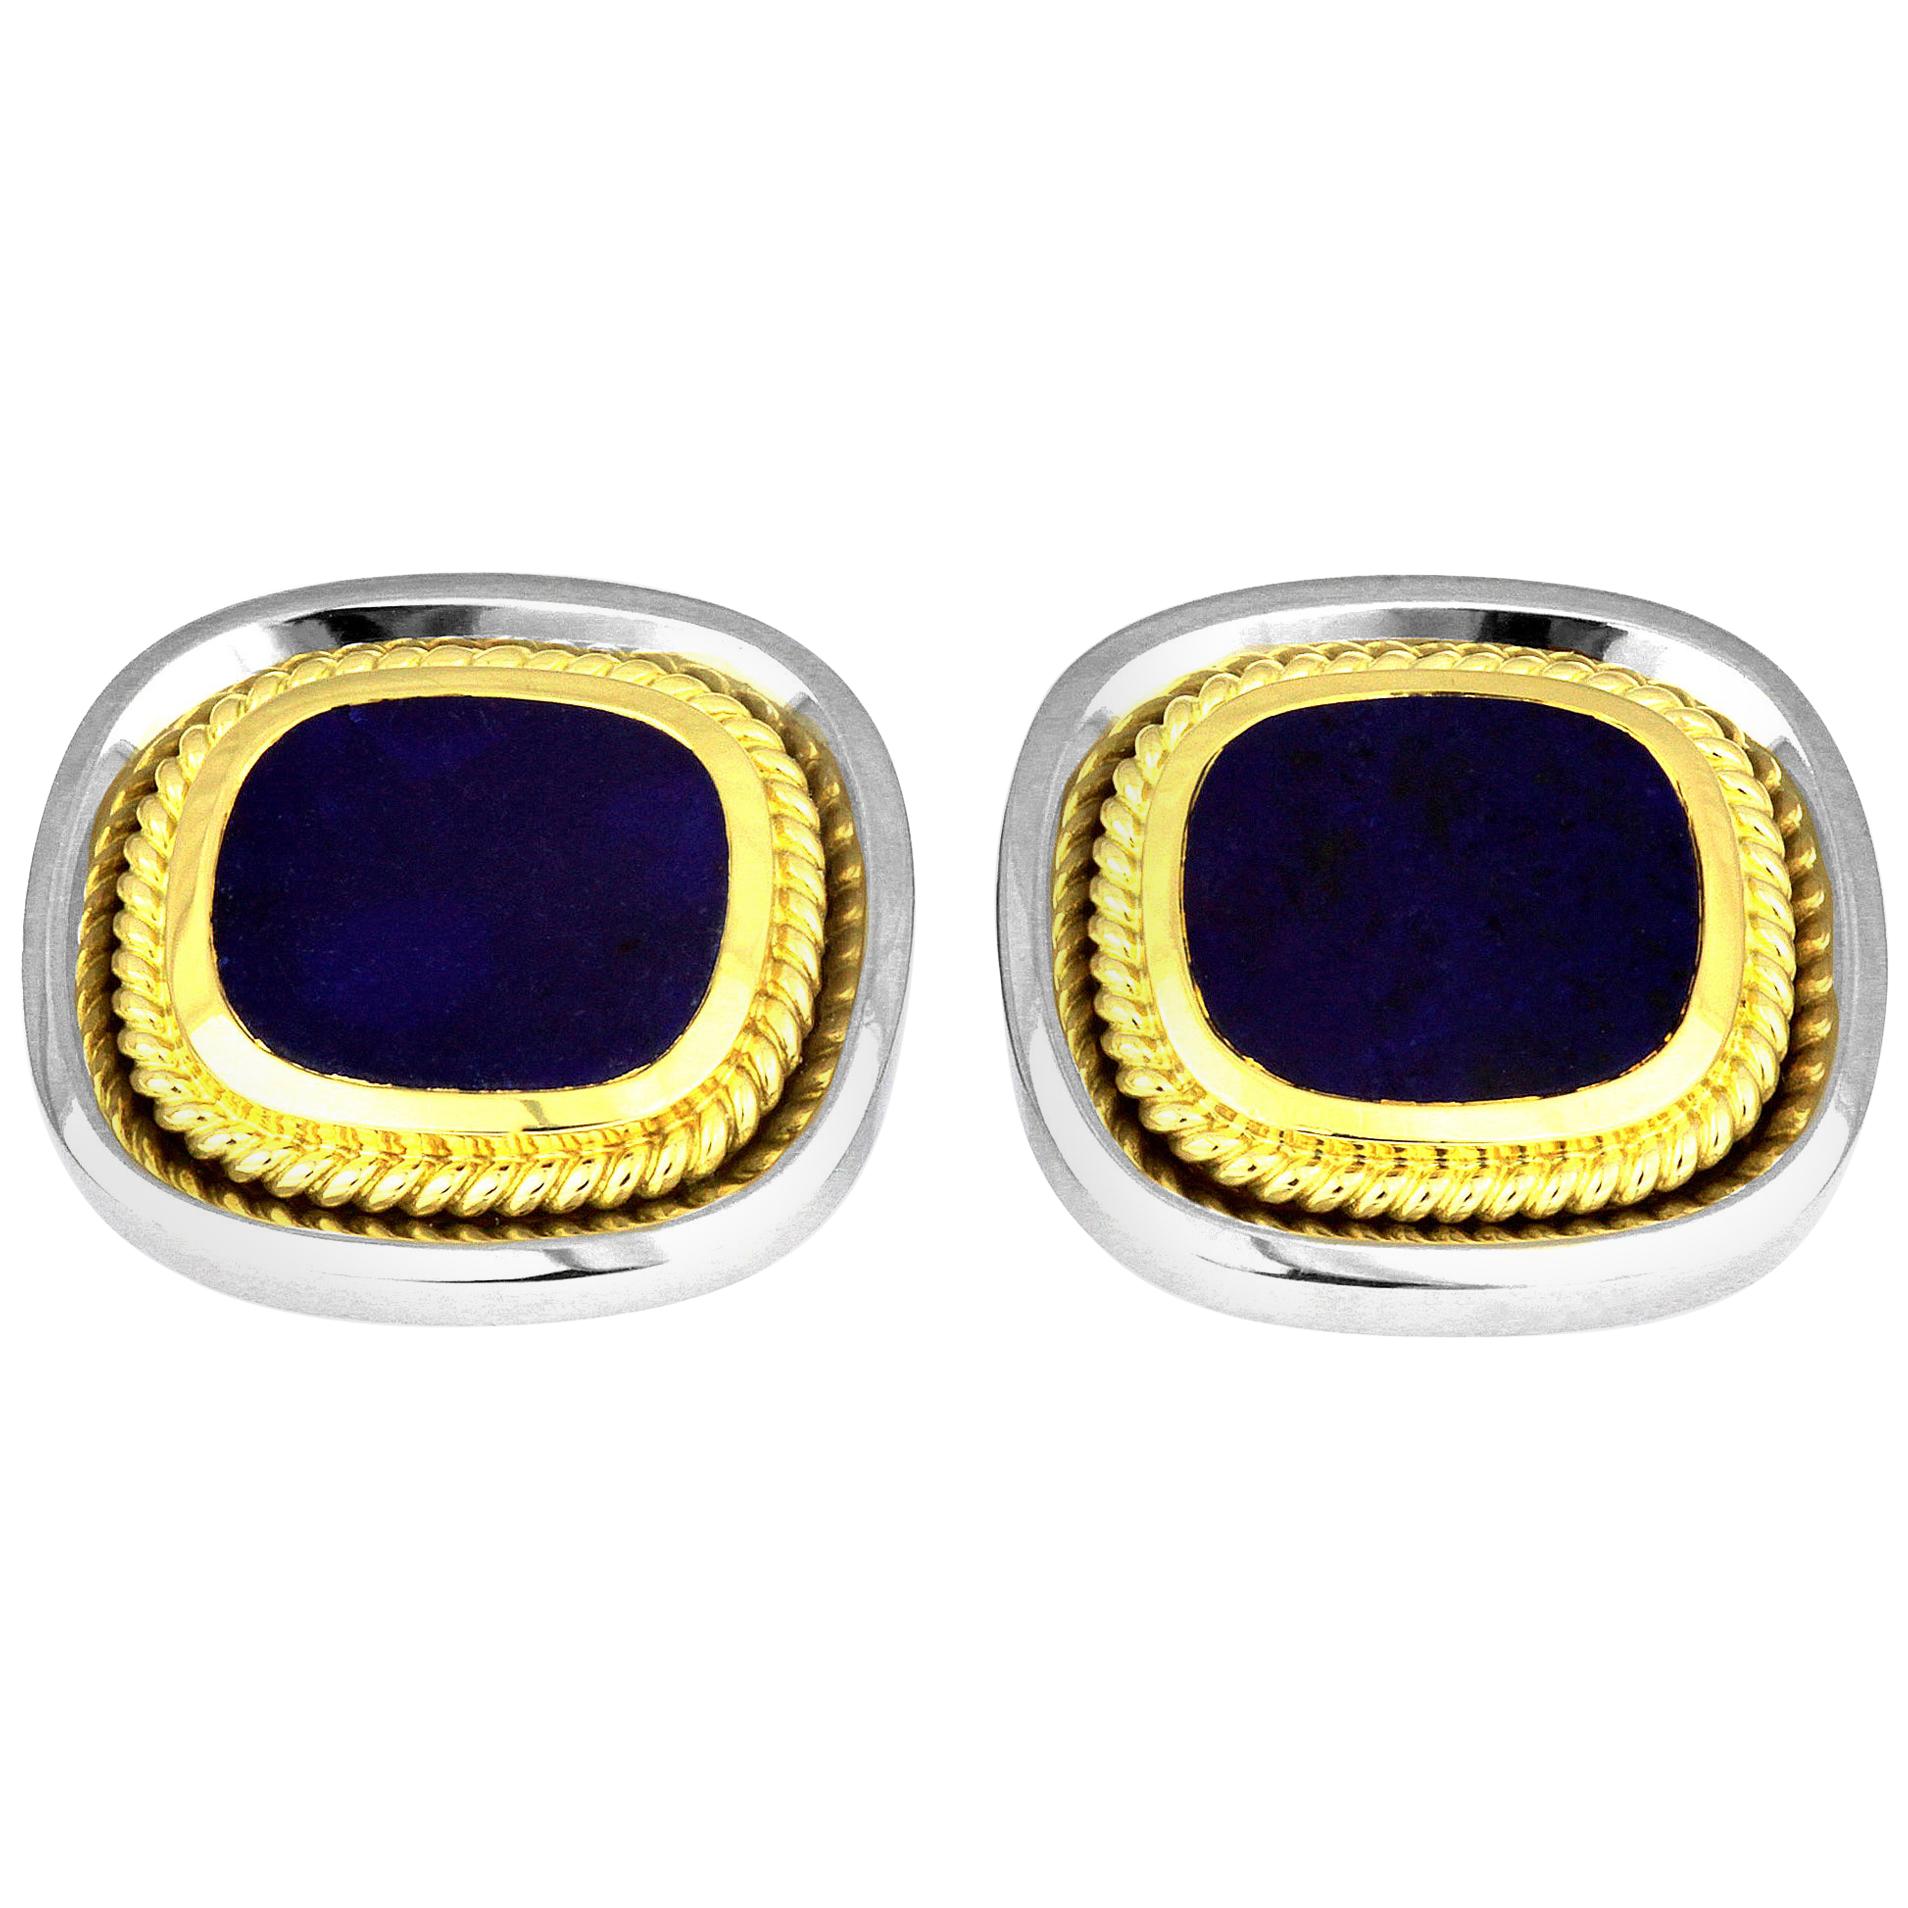 Vintage Cufflinks with Lapis Lazuli in Bimetal 18 Carat White & Yellow Gold